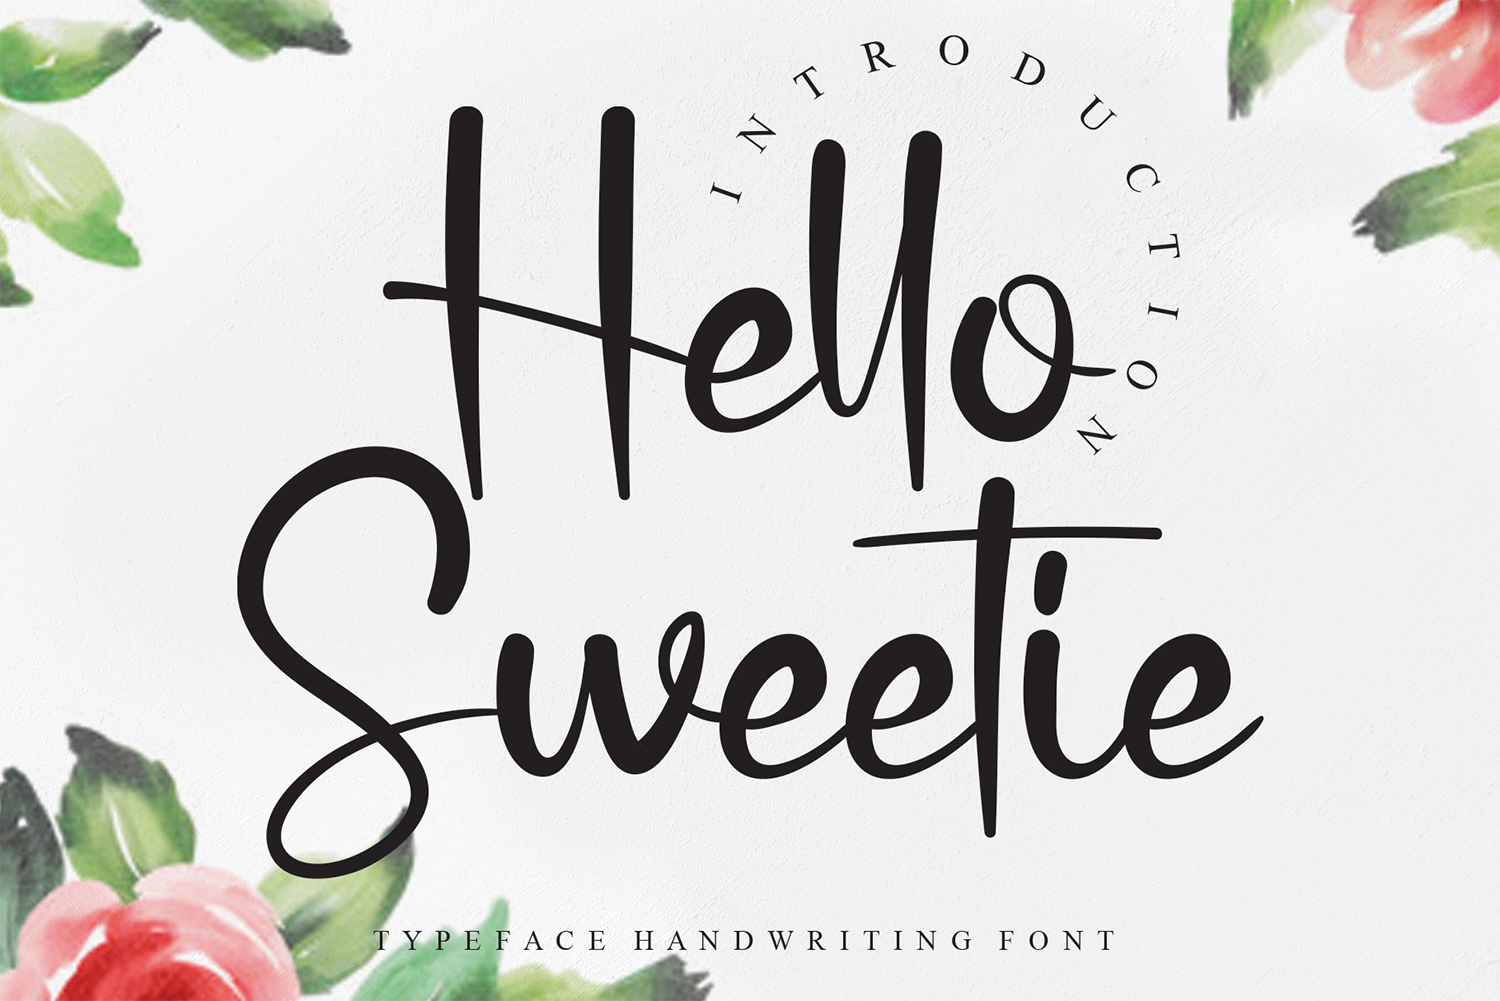 Hello Sweetie Free Font